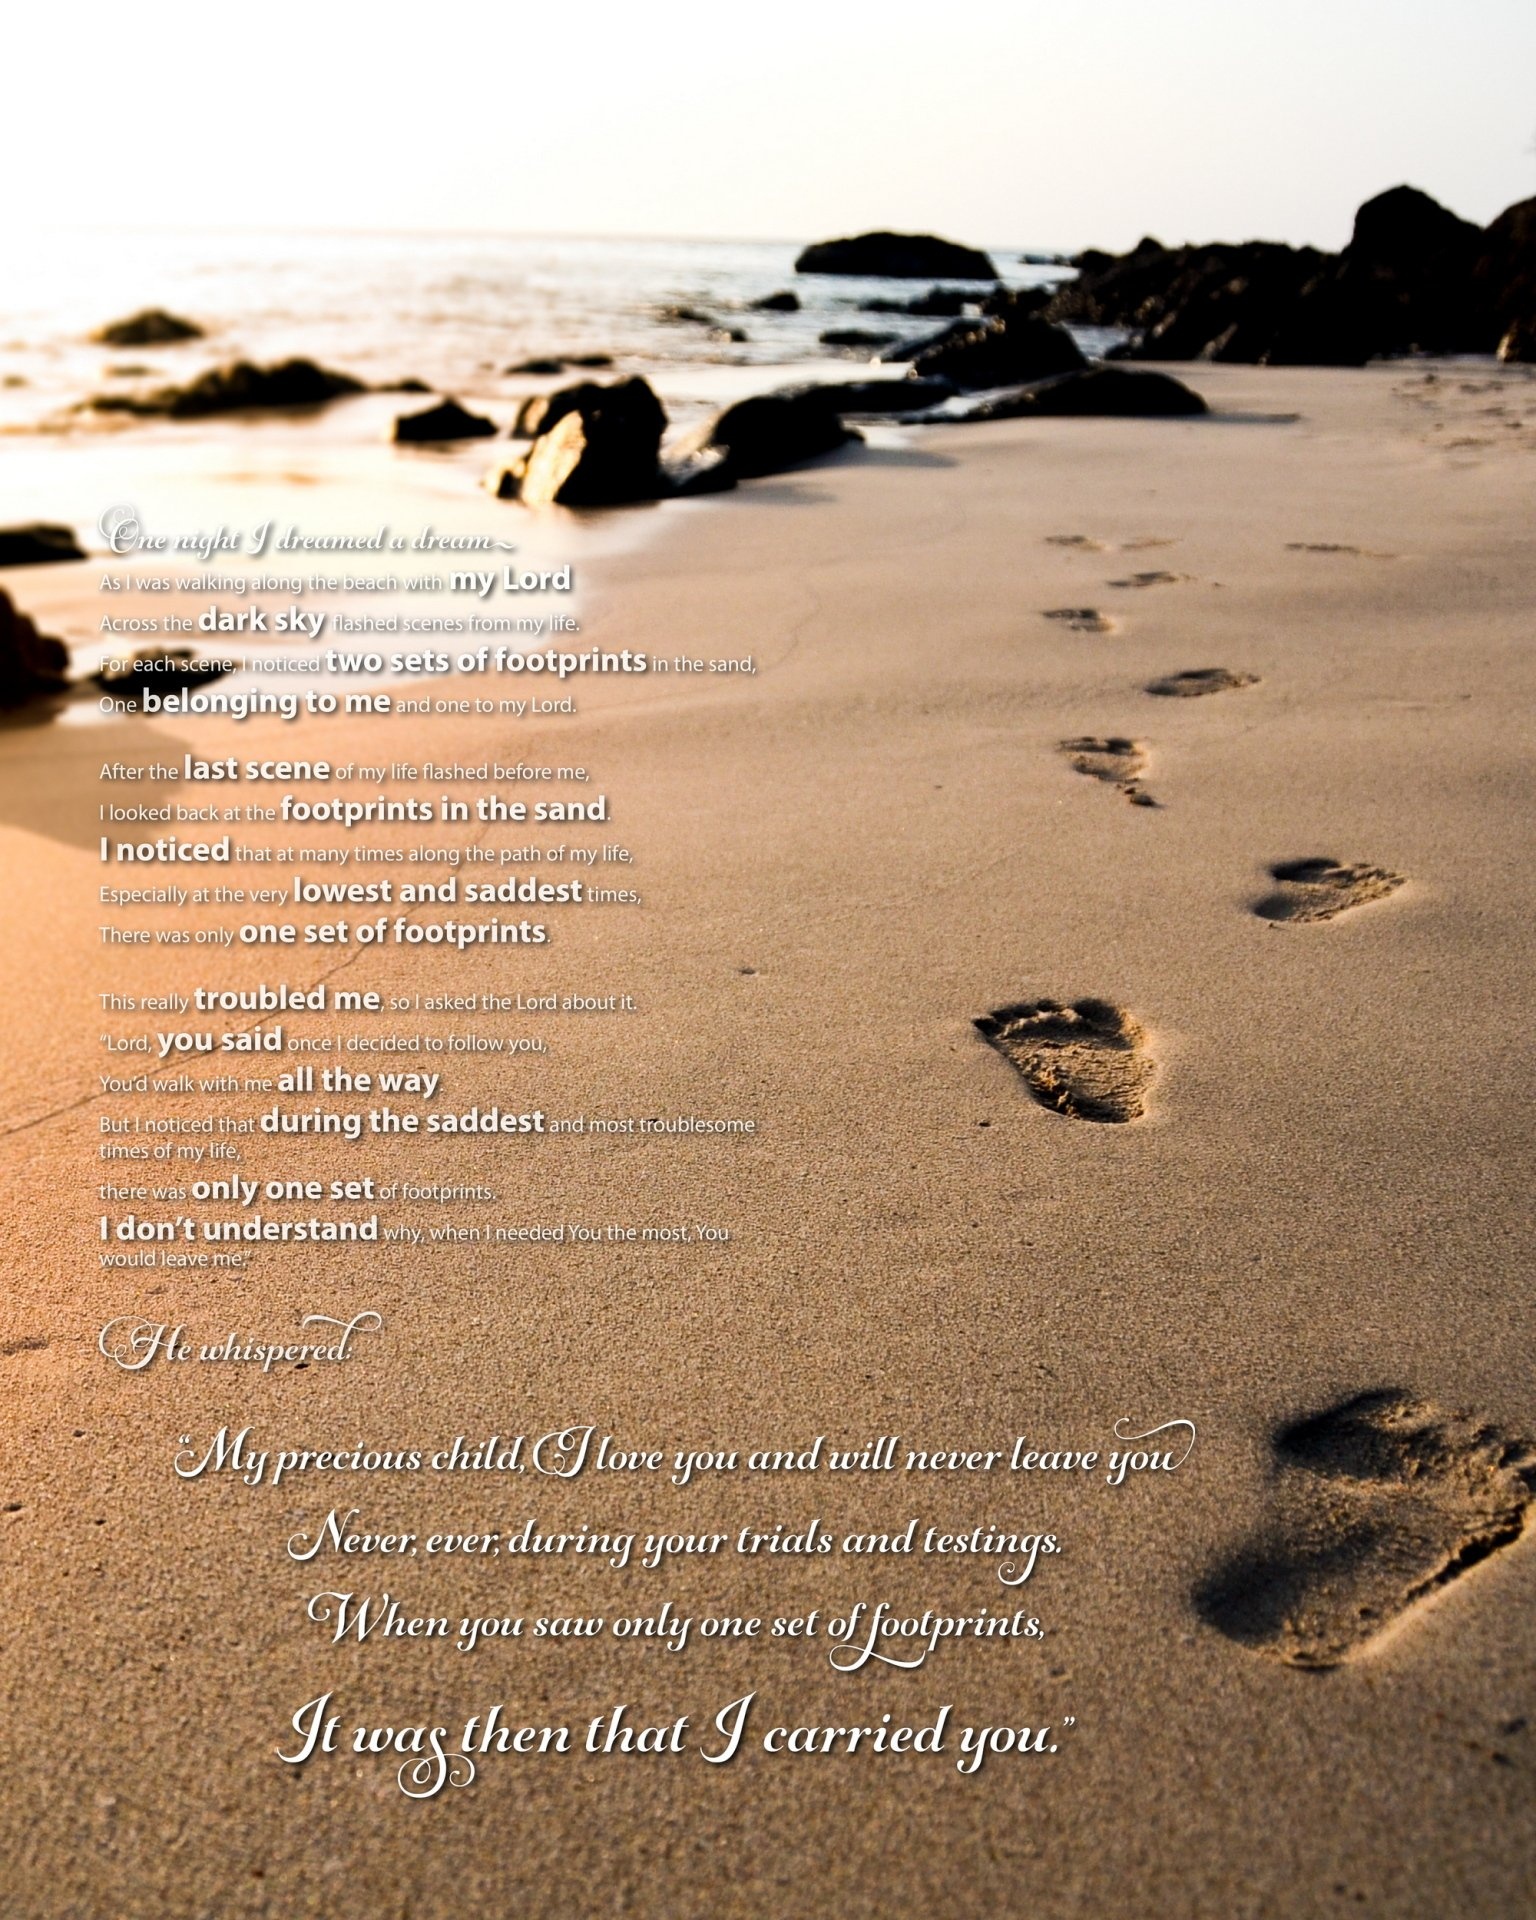 Footprints In The Sand Printable Free Free Printable